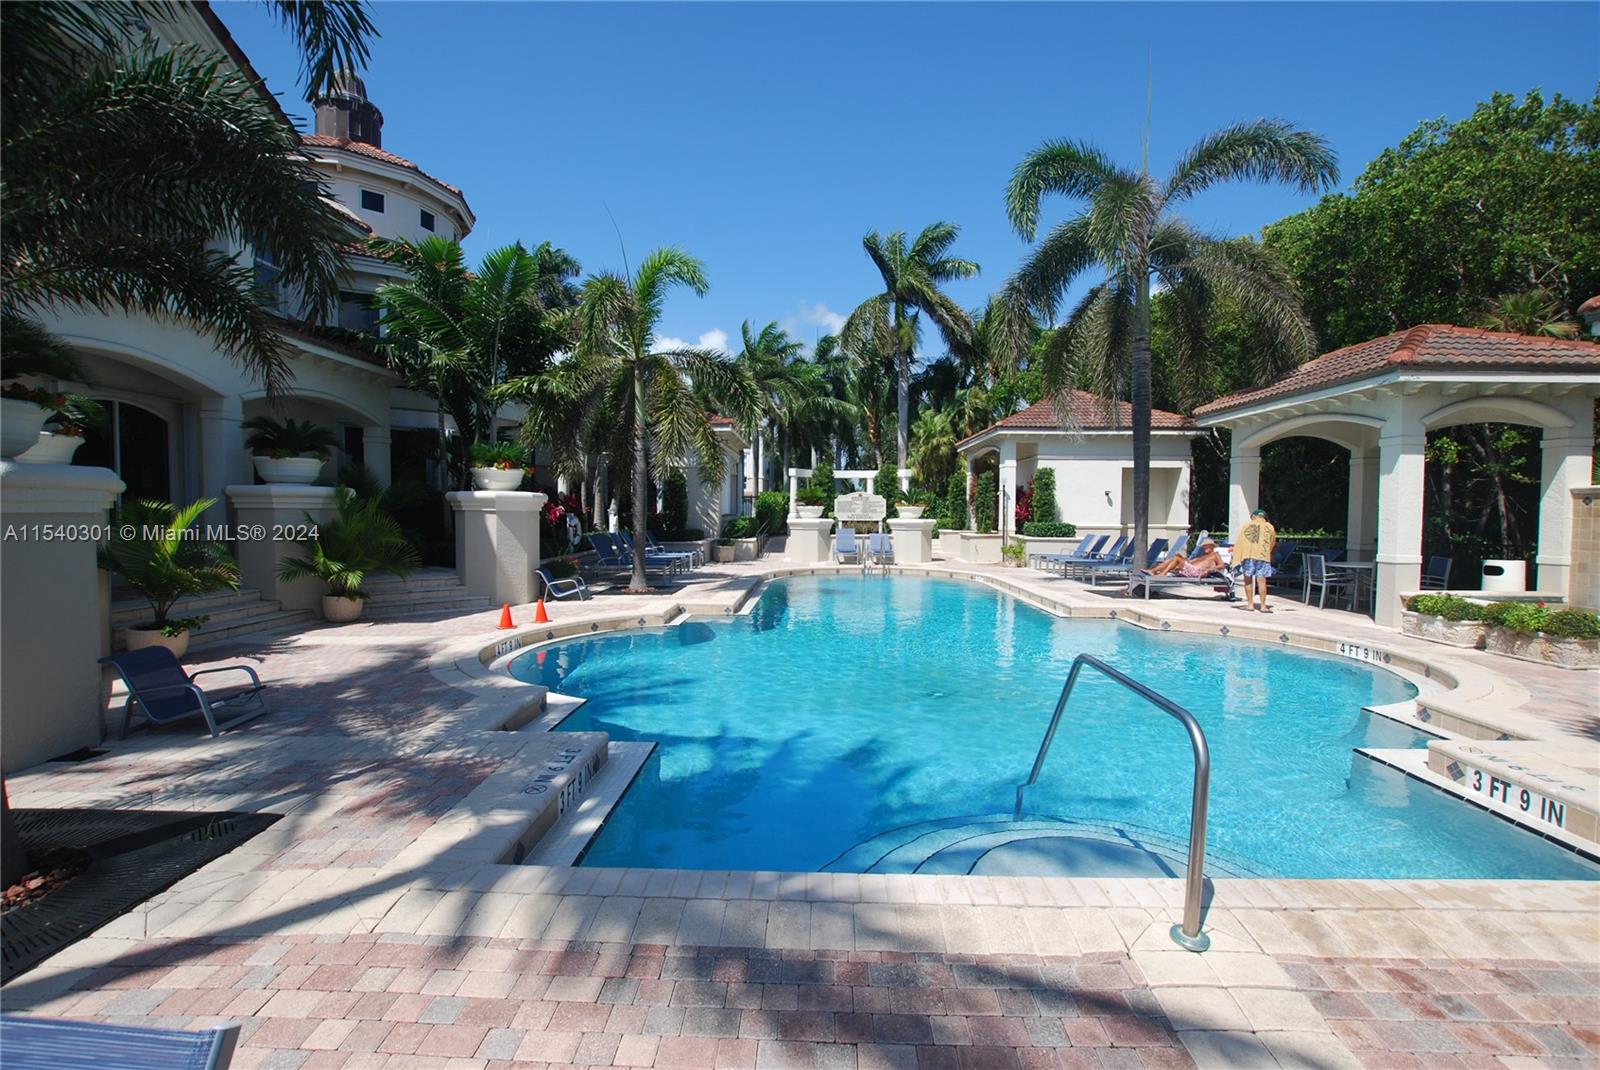 Rental Property at 4411 Tuscany Way 4411, Boynton Beach, Palm Beach County, Florida - Bedrooms: 2 
Bathrooms: 2  - $2,500 MO.